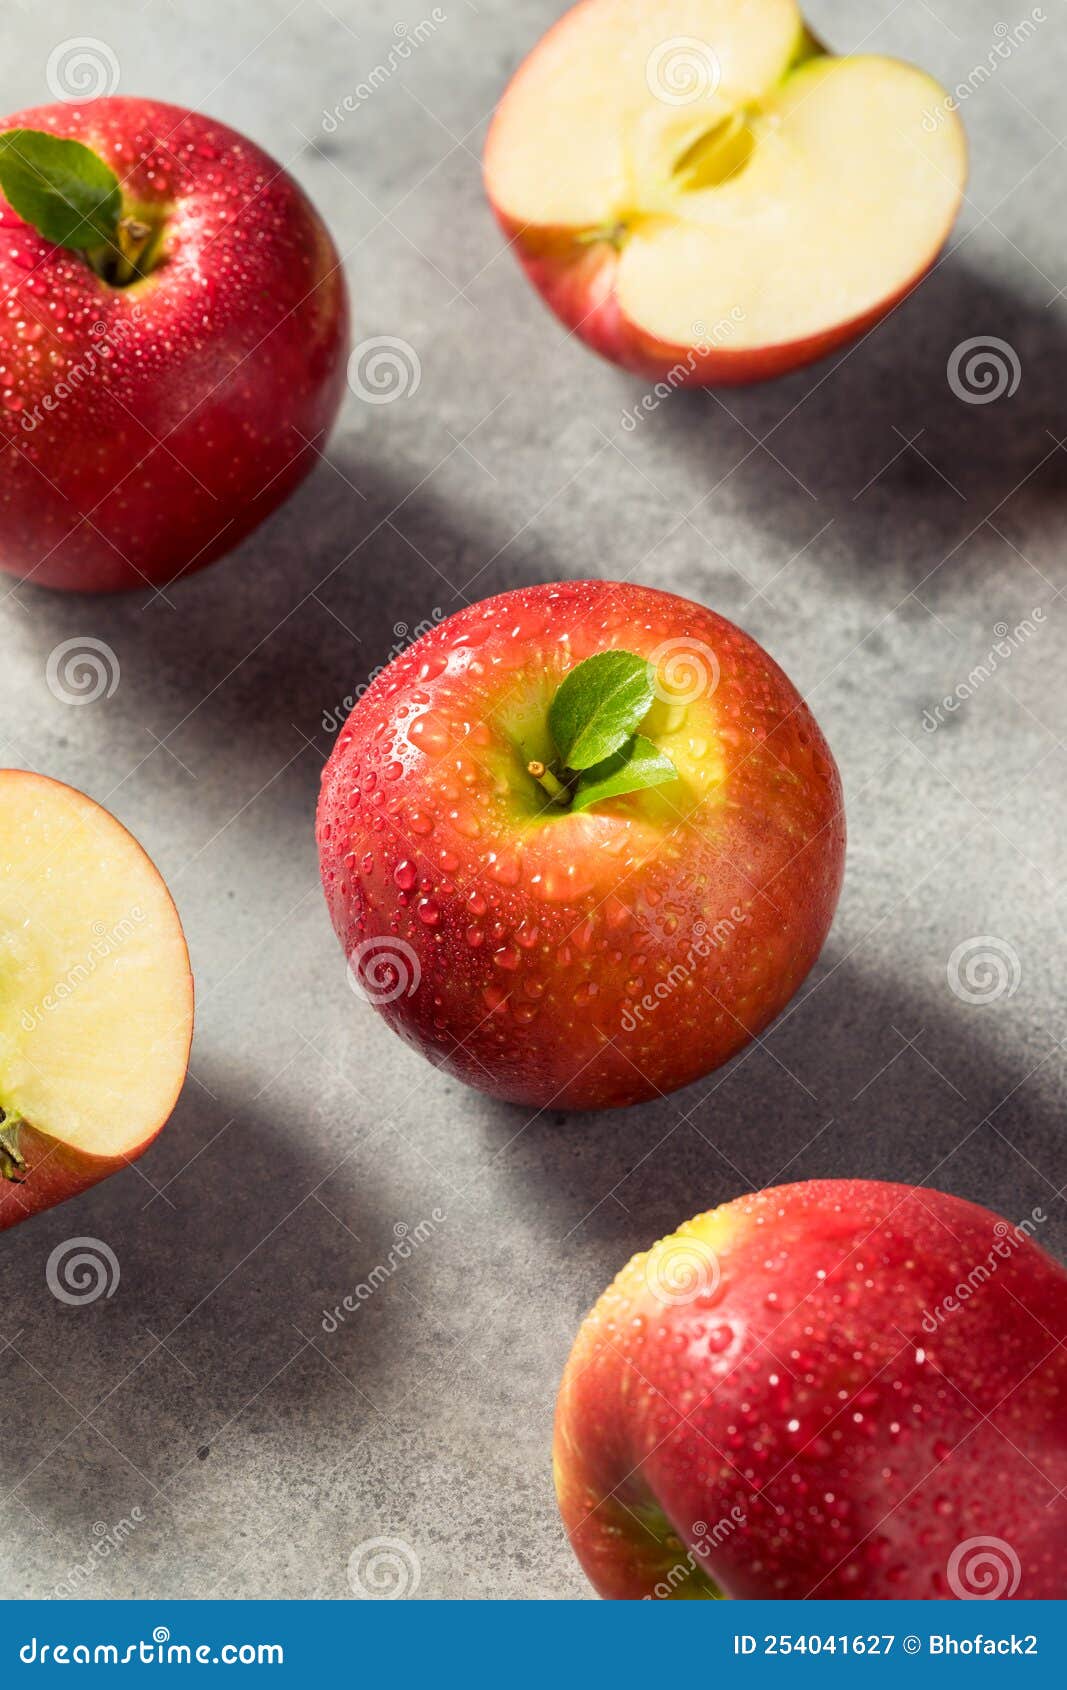 Raw Red Organic Cosmic Crisp Apples Stock Image - Image of sweet